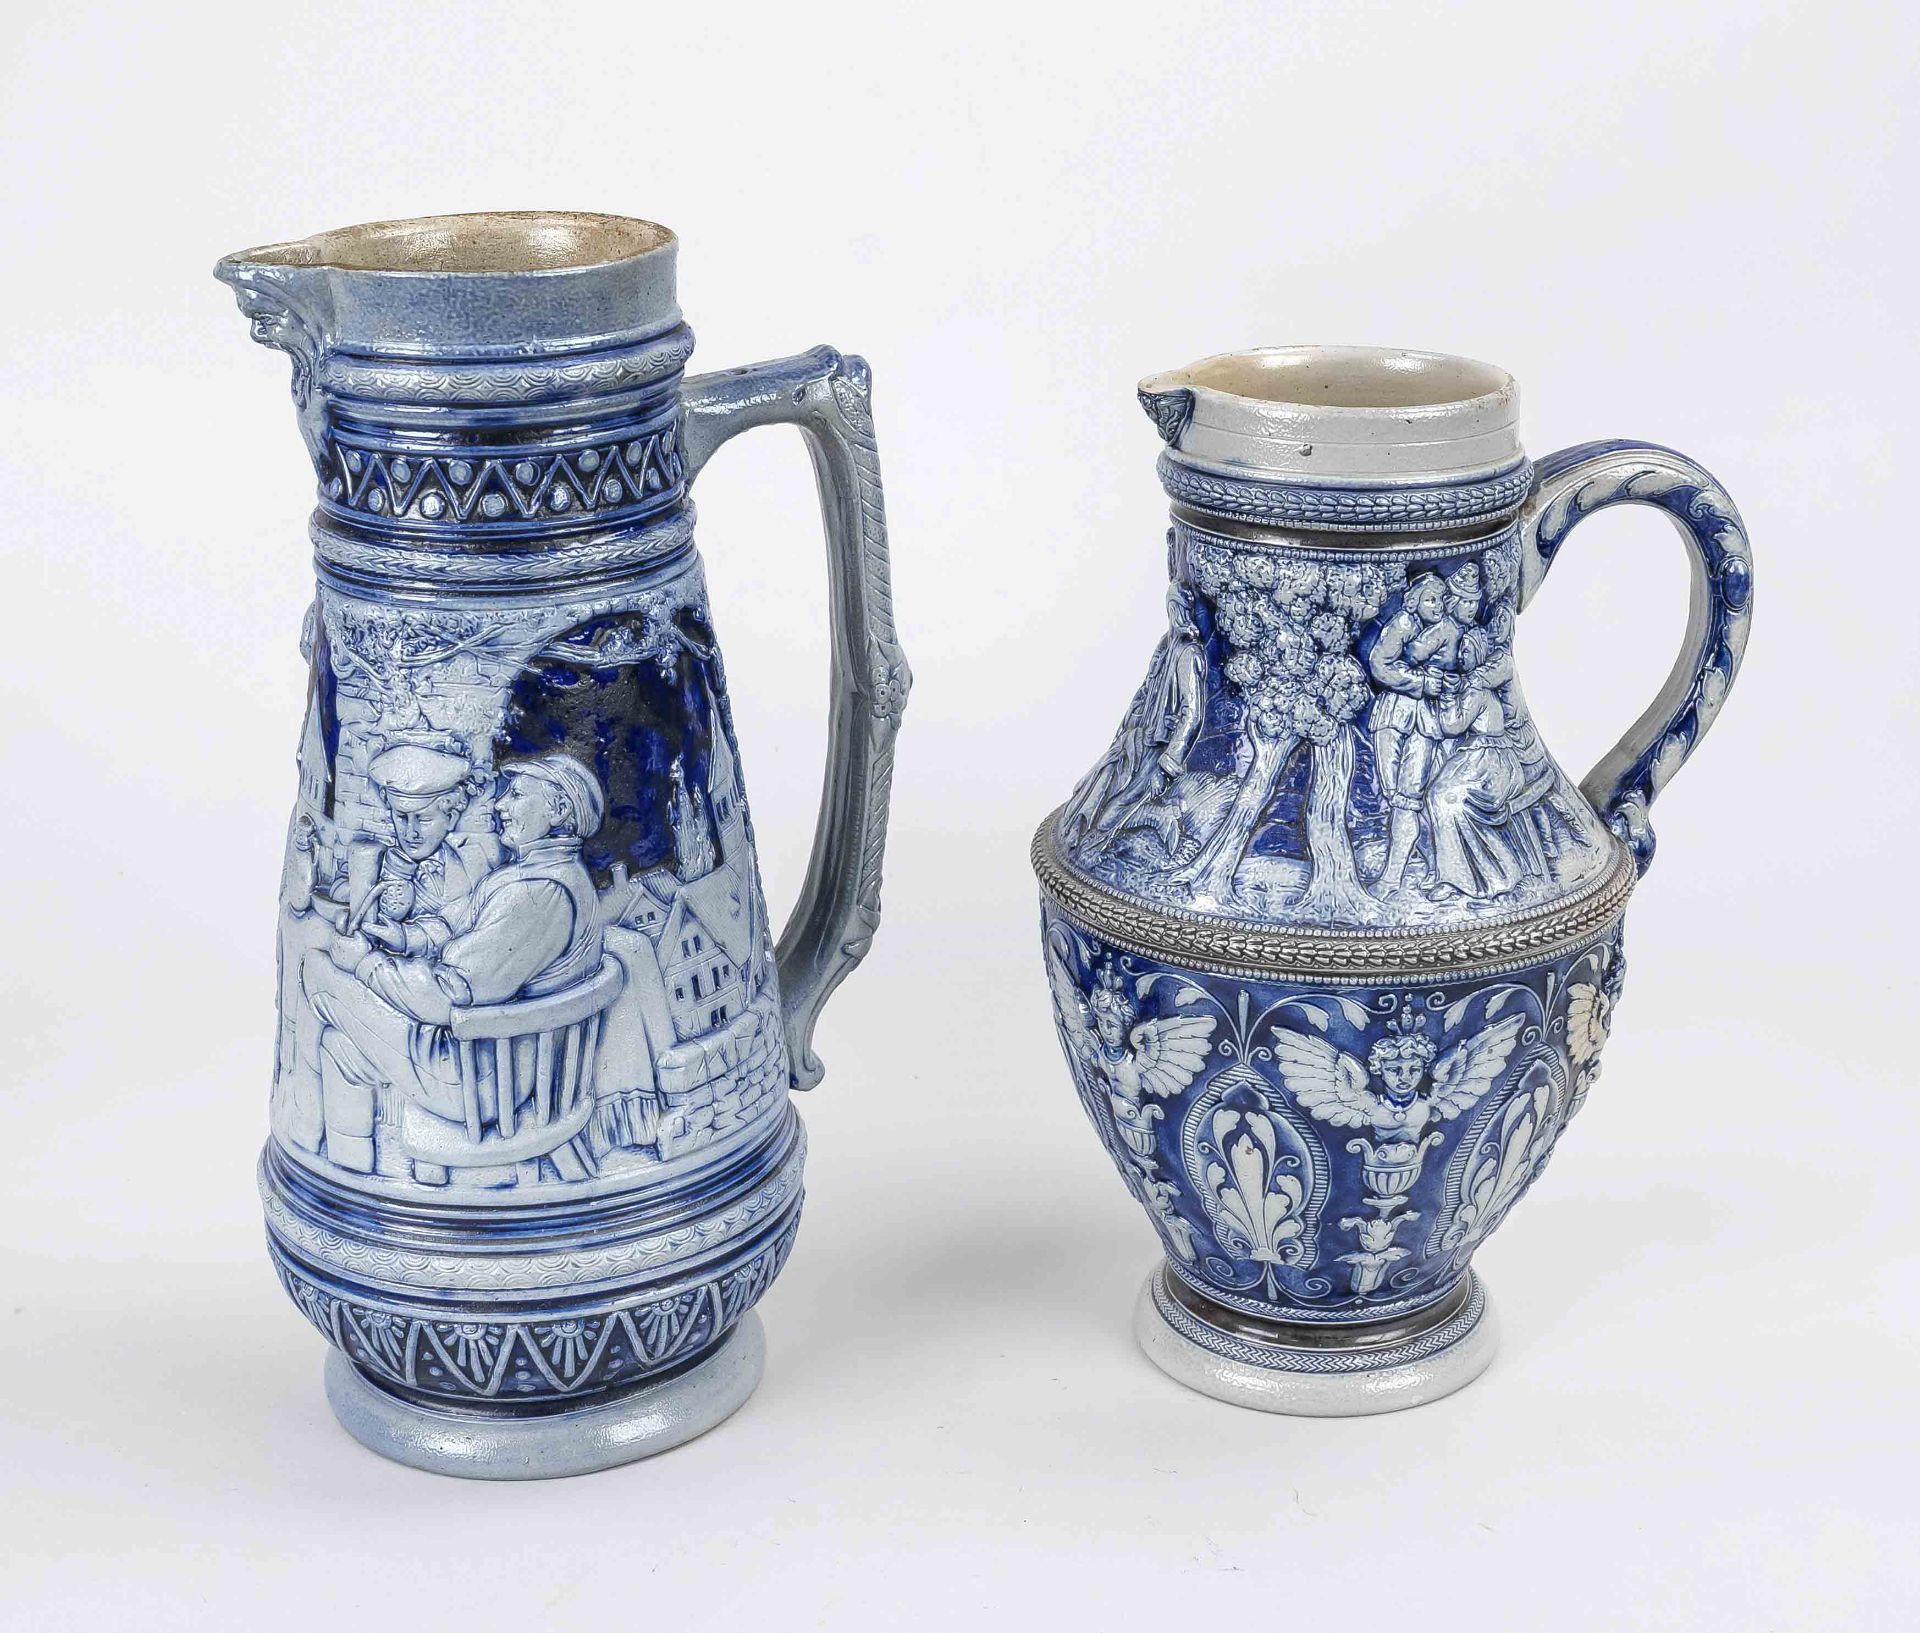 2 Westerwald jugs, Germany, around 1900, stoneware with blue glaze, fig.l decor, h to 32cm